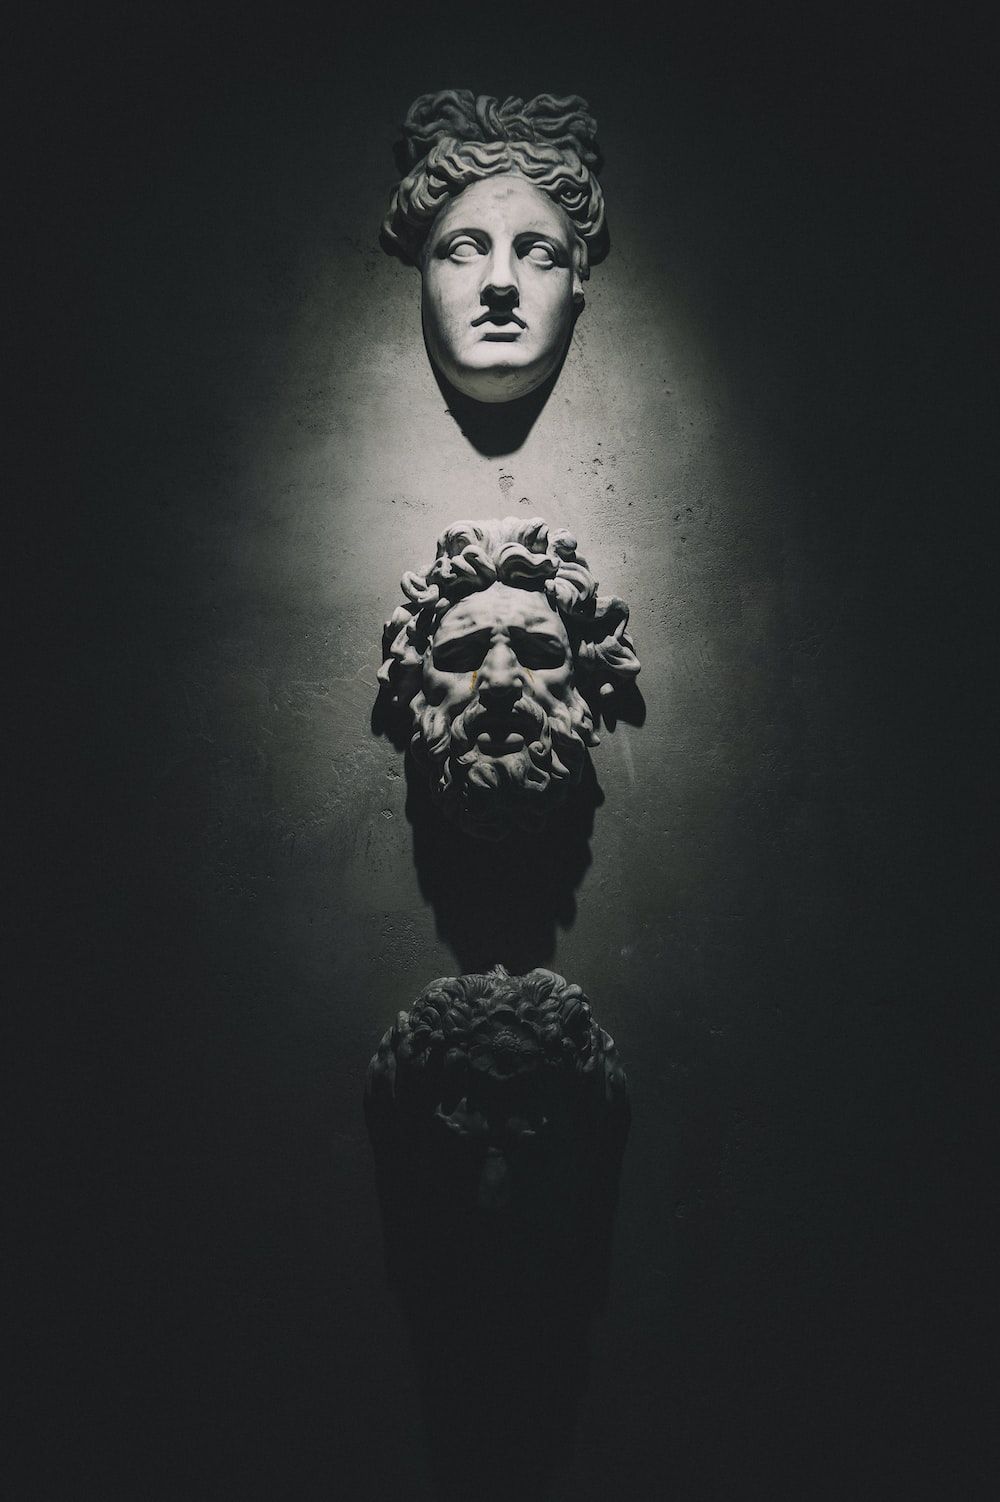 A group of heads on the wall - Greek mythology, Greek statue